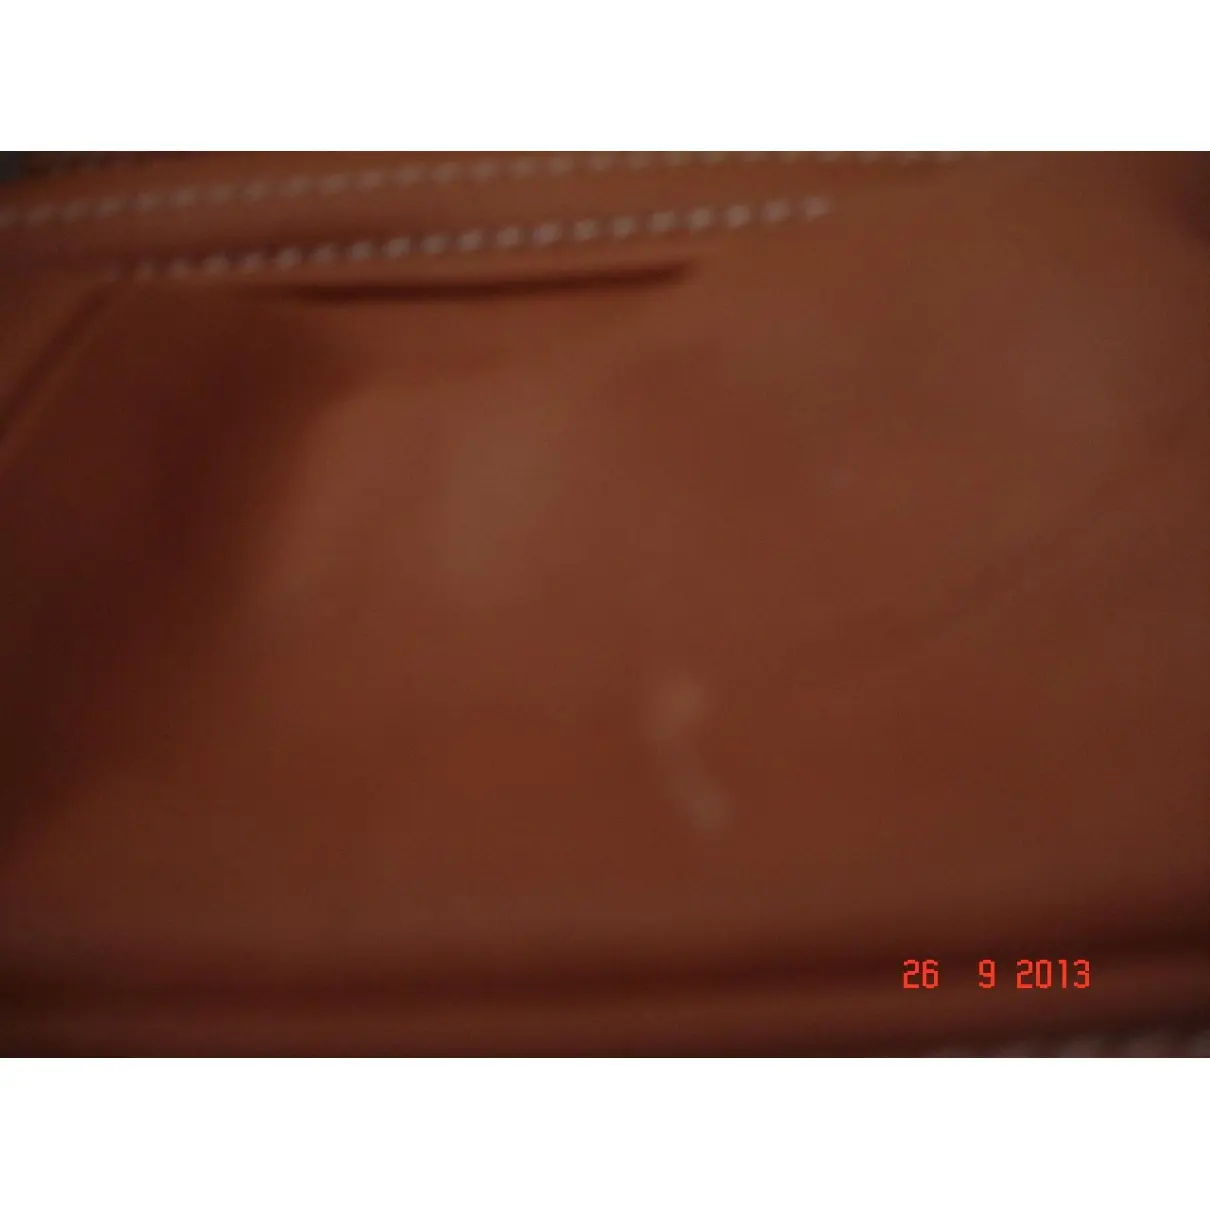 Buy Celine Beige Leather Handbag online